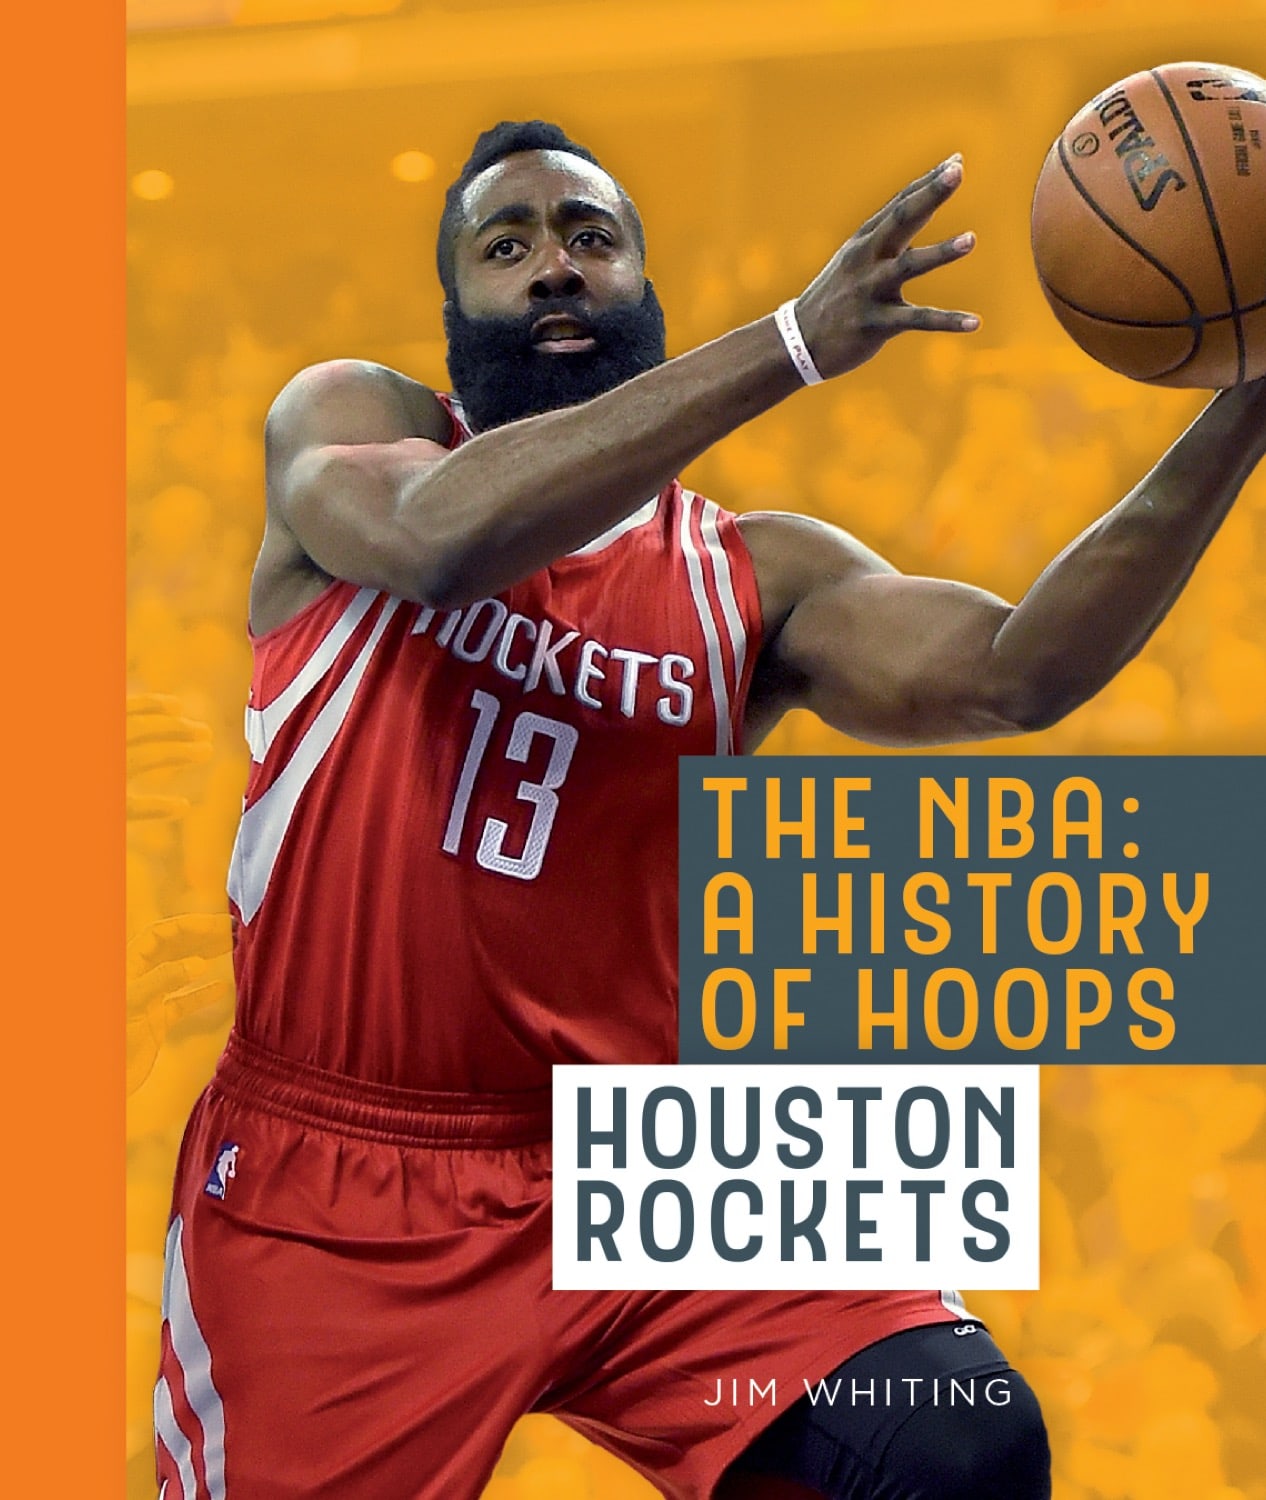 The NBA: A History of Hoops: Houston Rockets